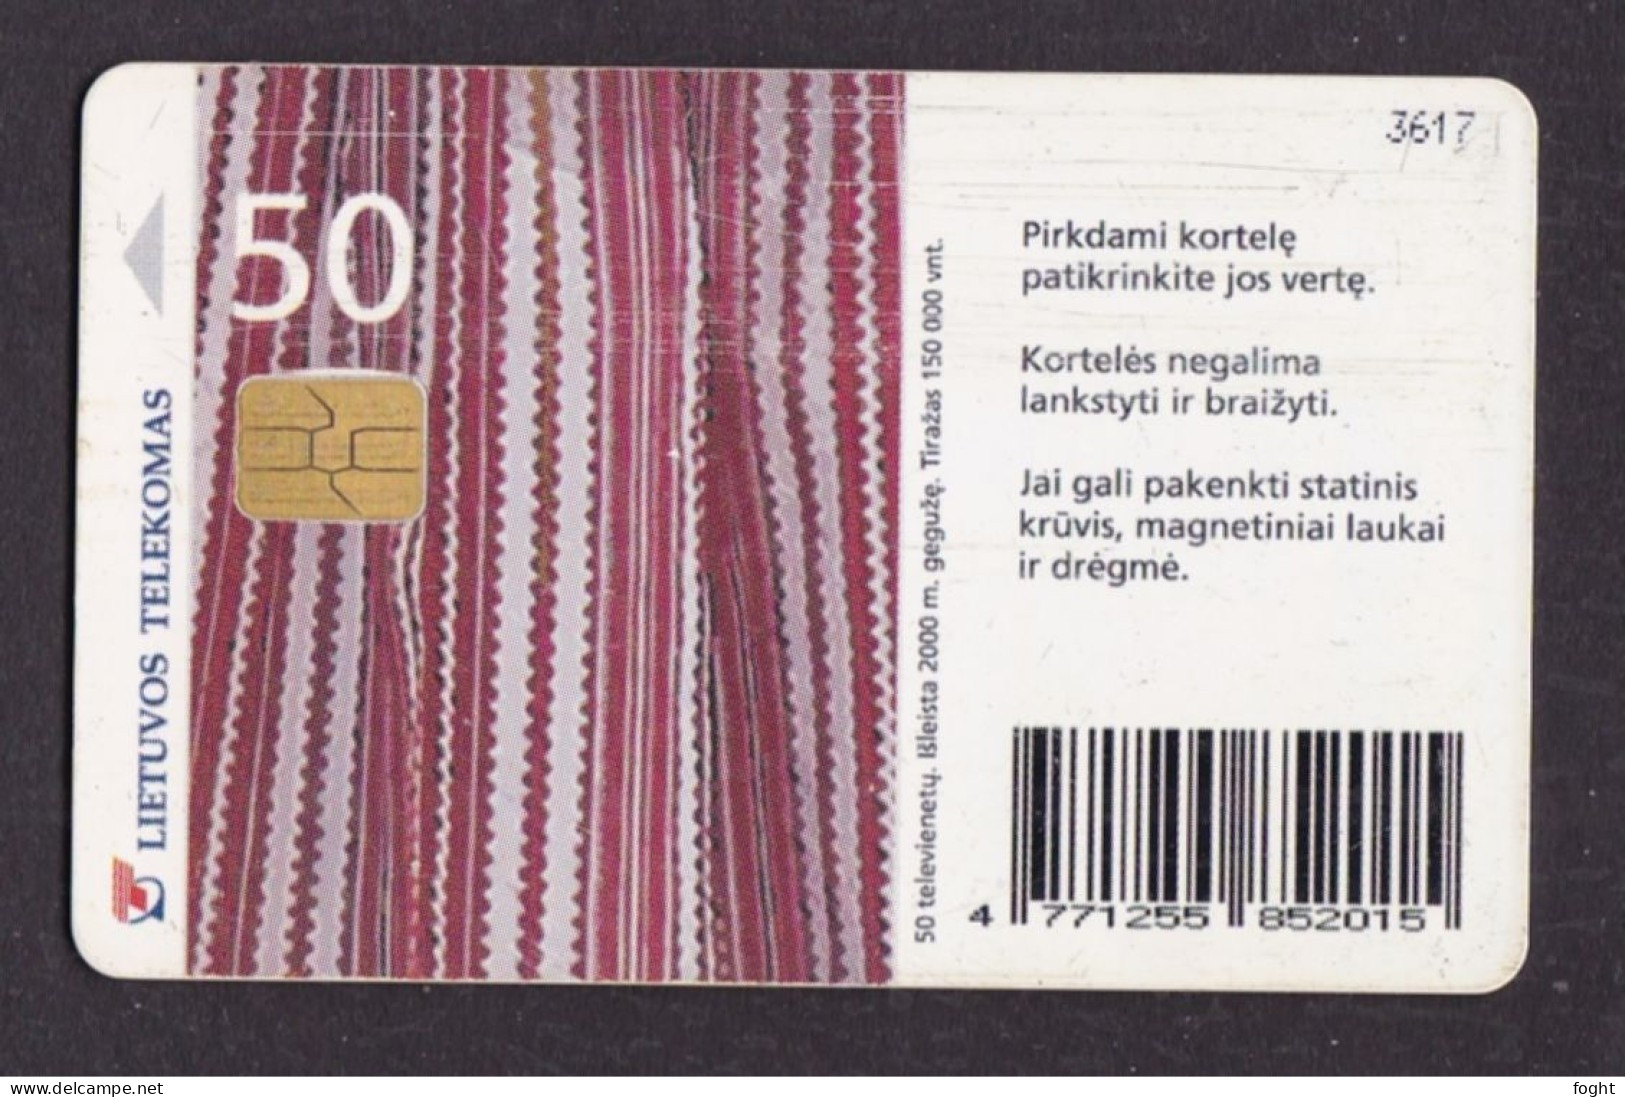 2000 Lietuvos Telekomas Chip Card,A Girl From Zemaitija,50 Units,Col:LT-LTV-C045 - Lithuania